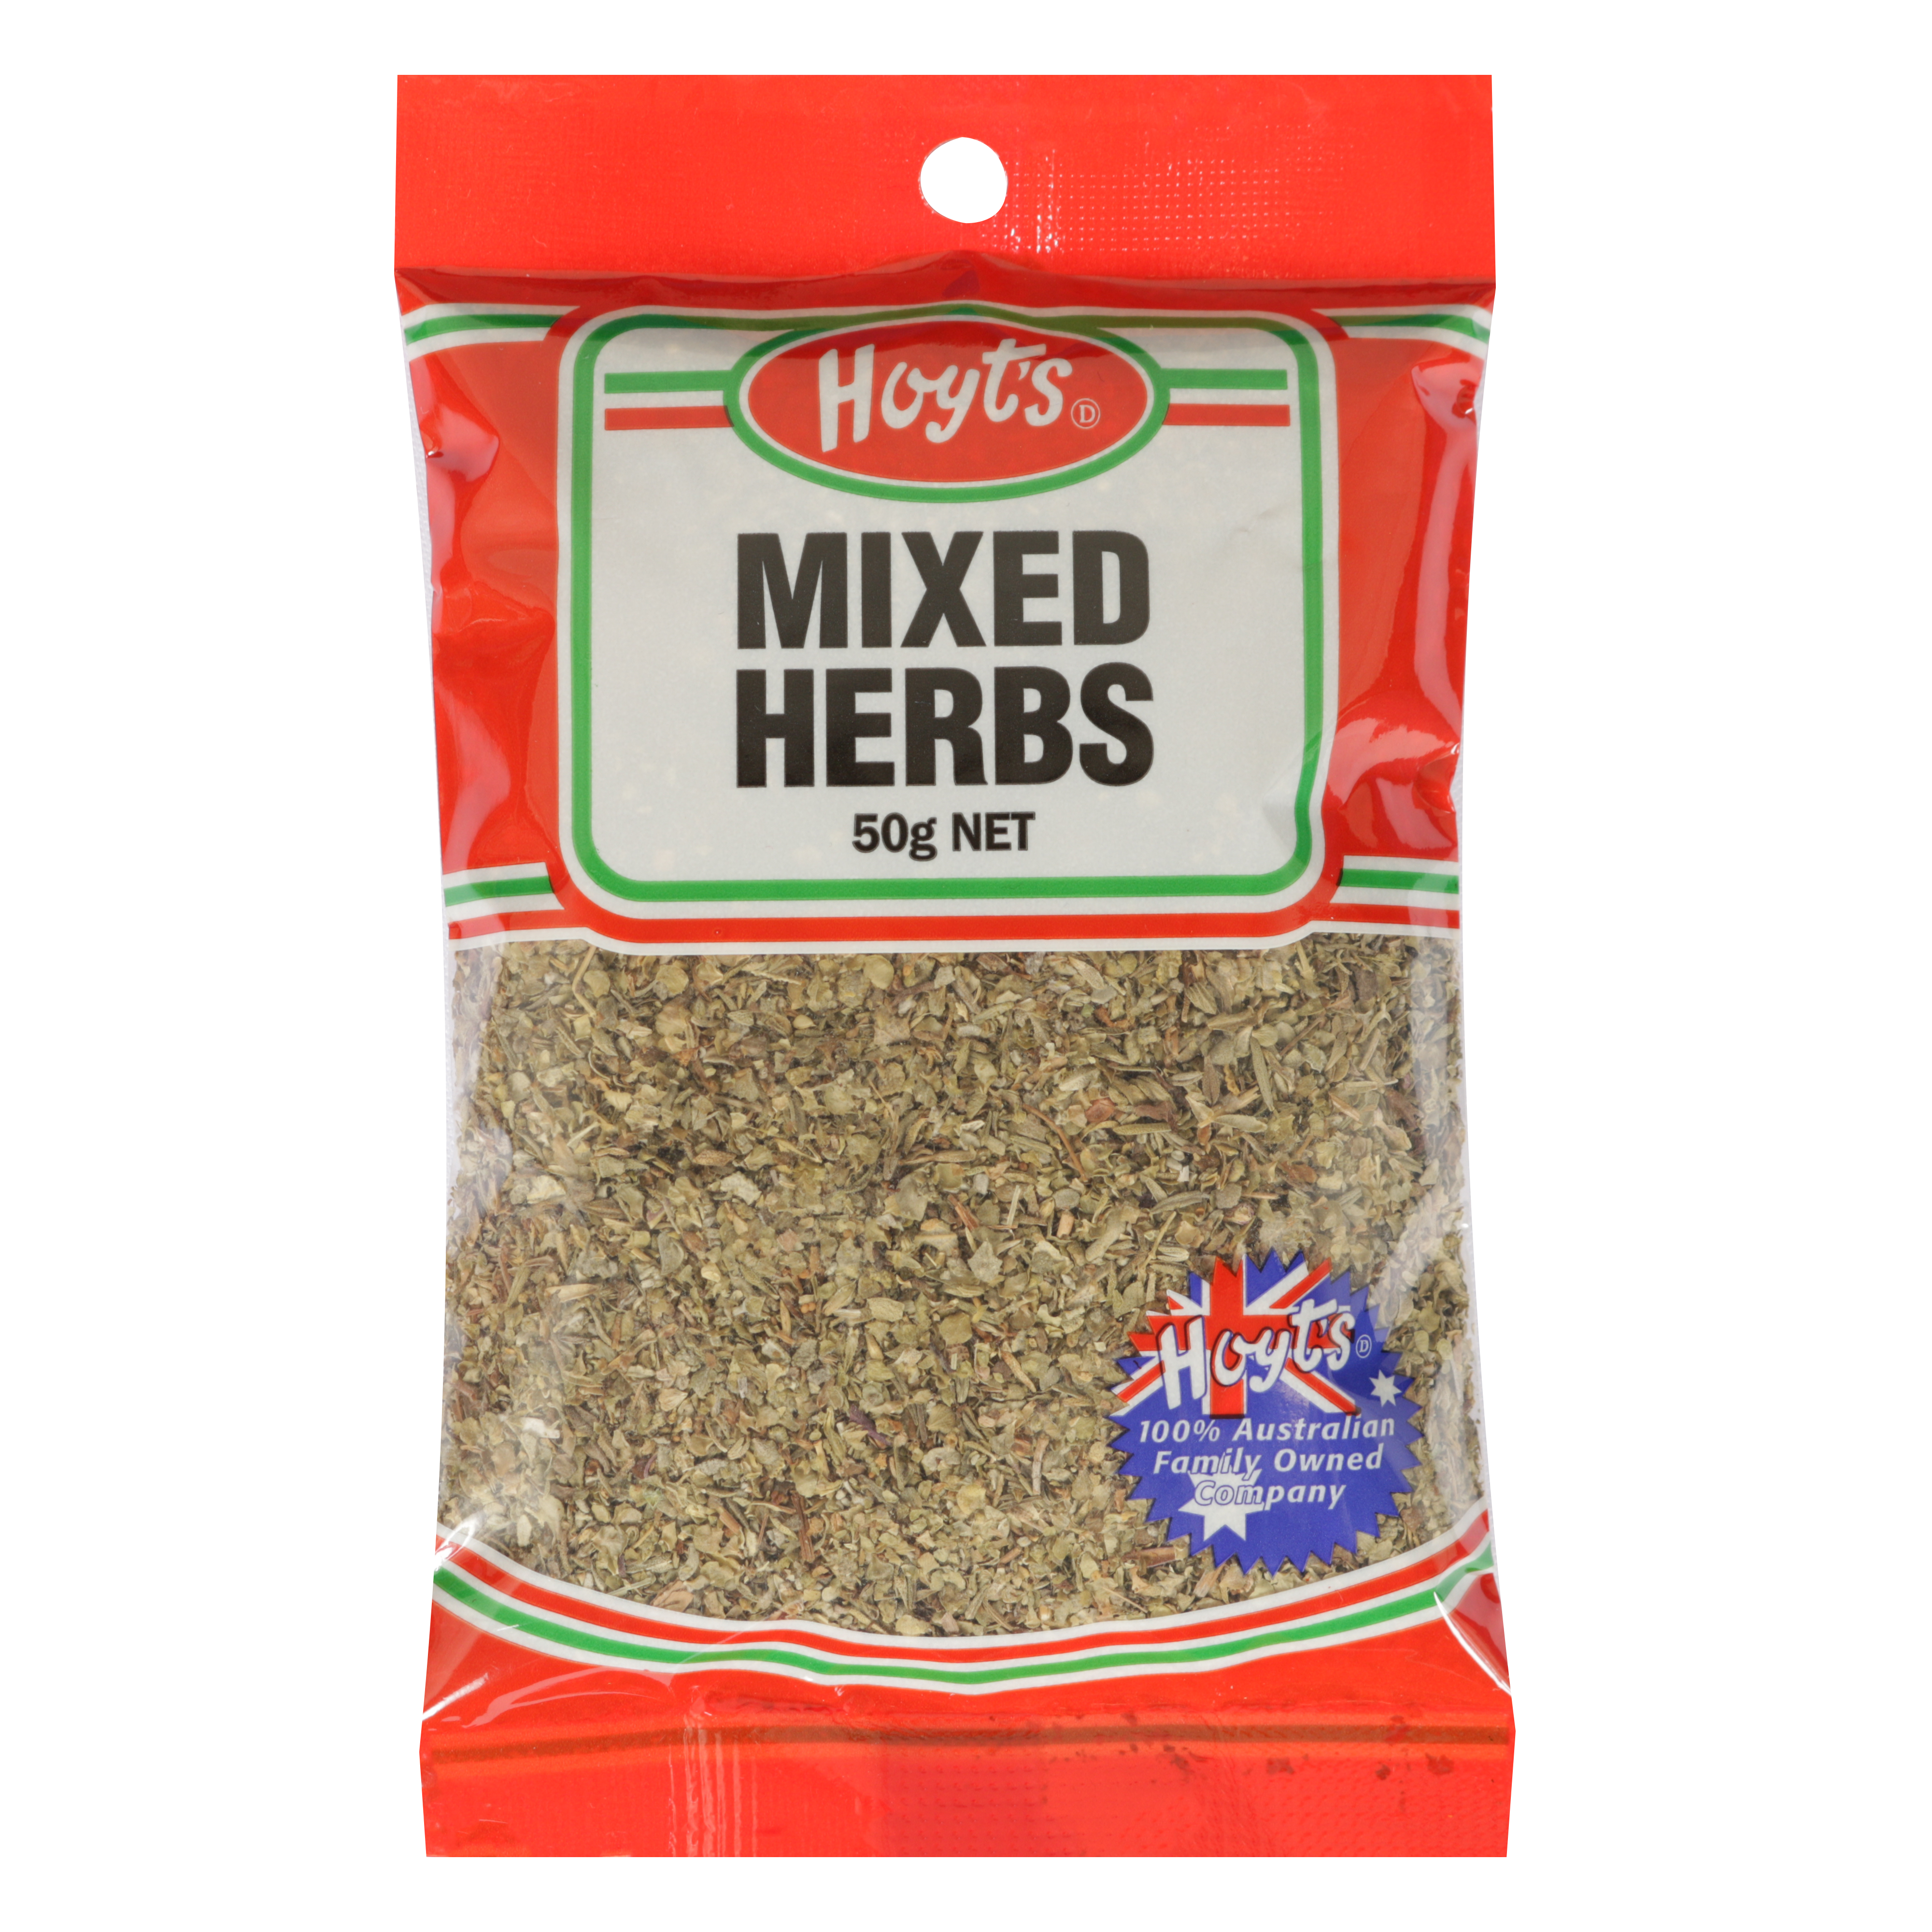 Hoyts Mixed Herbs 50g